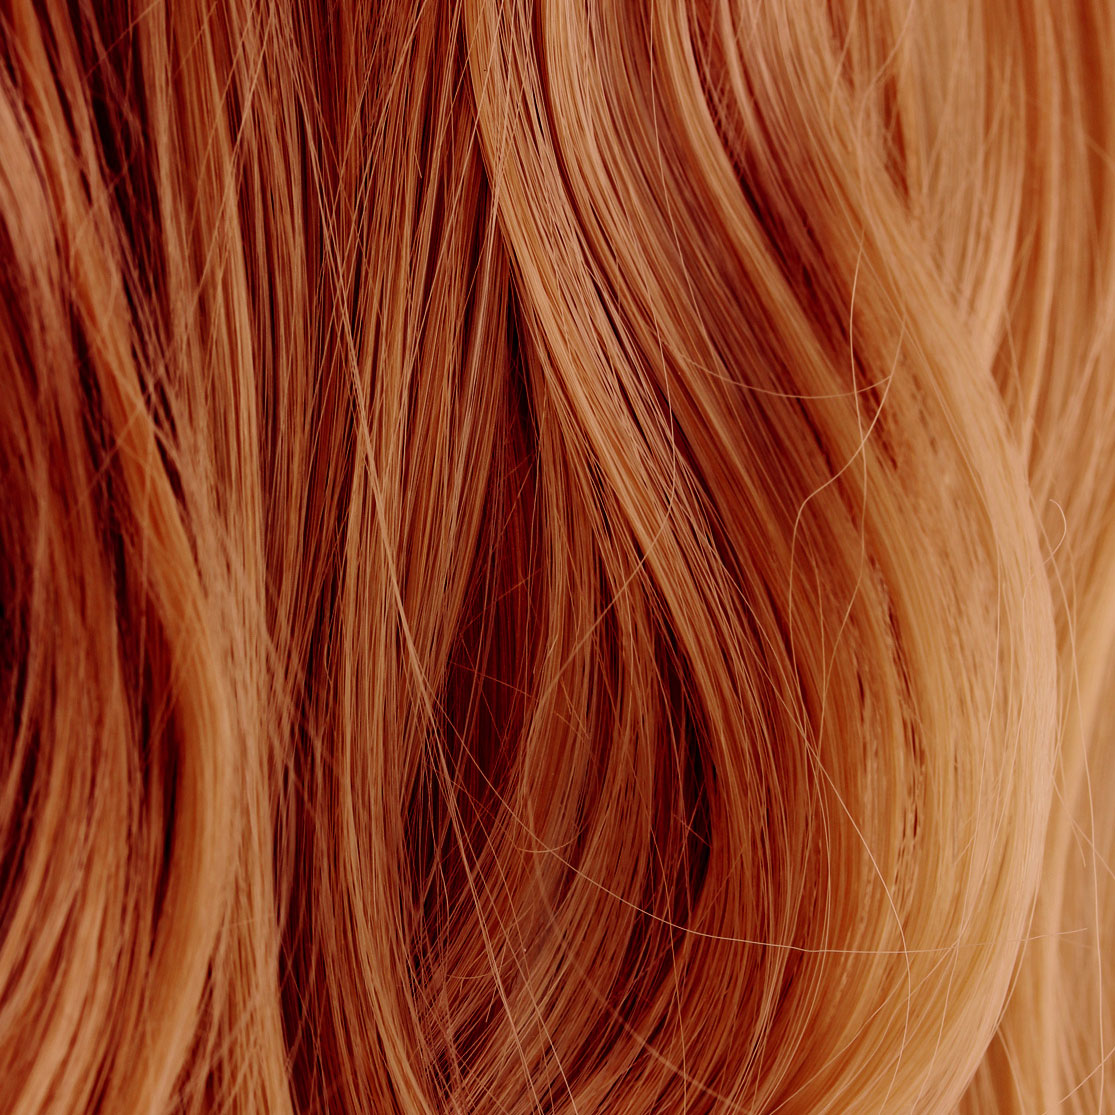 https://hennacolorlab.com/wp-content/uploads/2012/07/ginger-blonde-henna-hair-dye.jpg